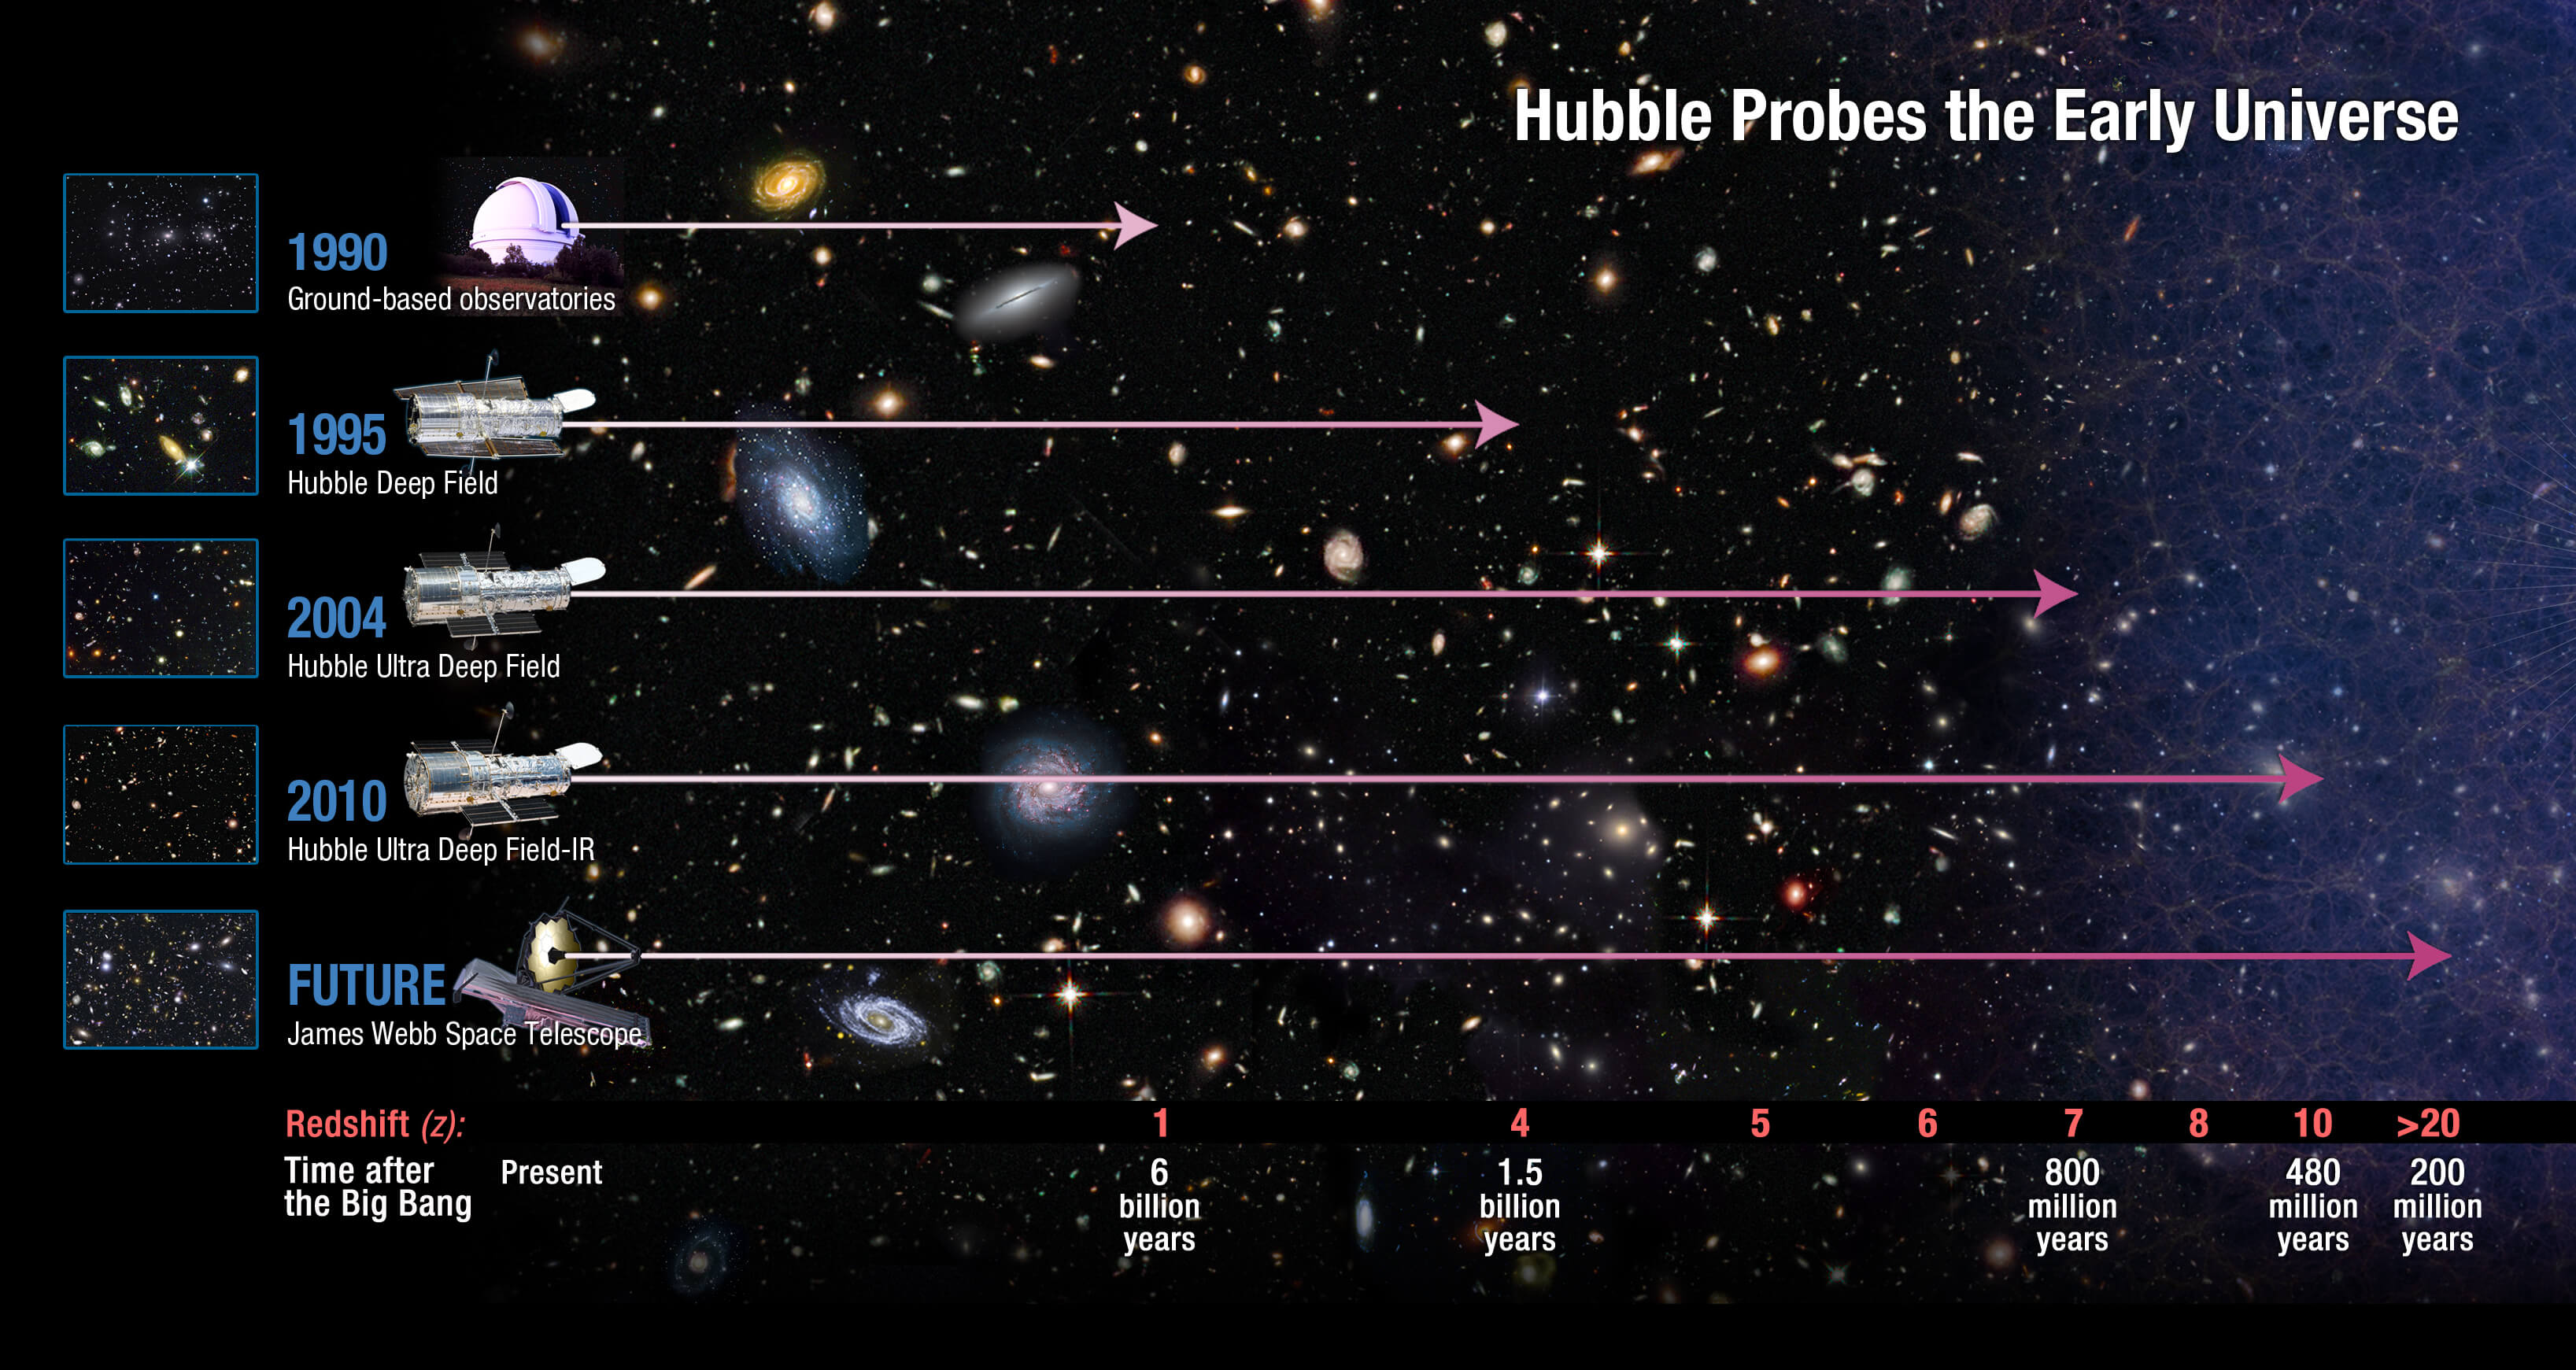 James-Webb-telescope-in-comparison.jpg